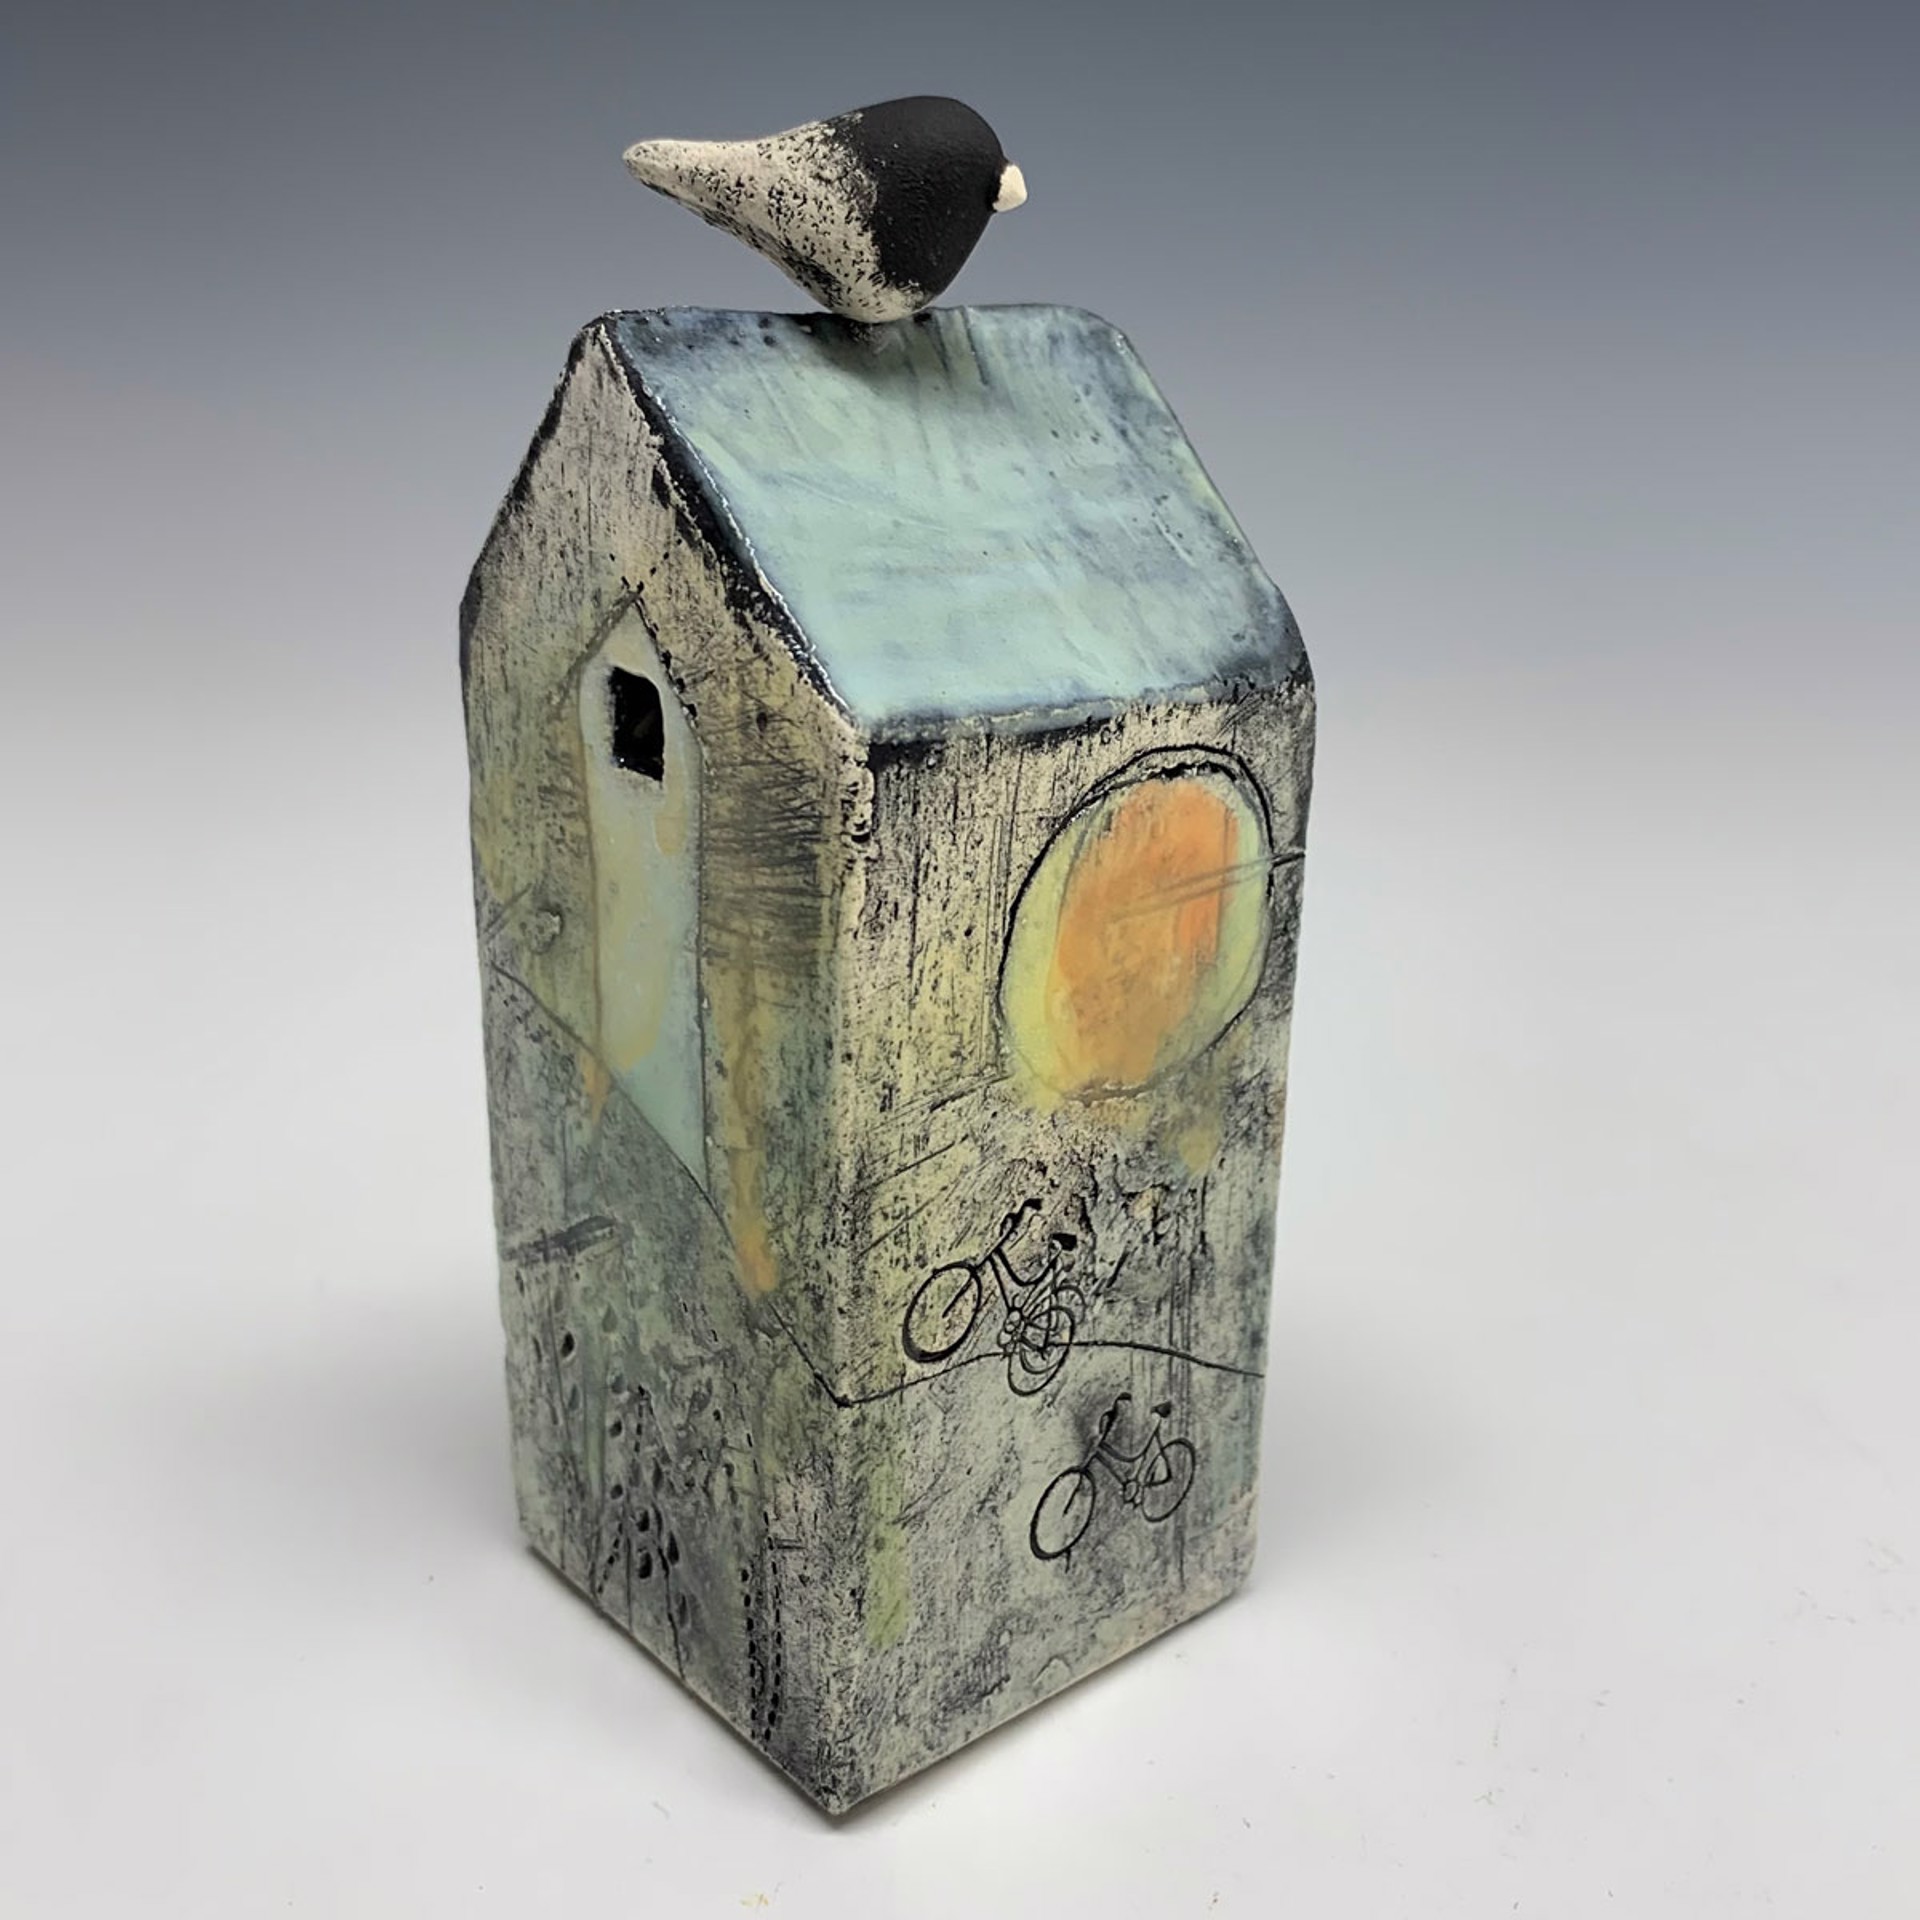 Tiny House#49 by Karen Abel